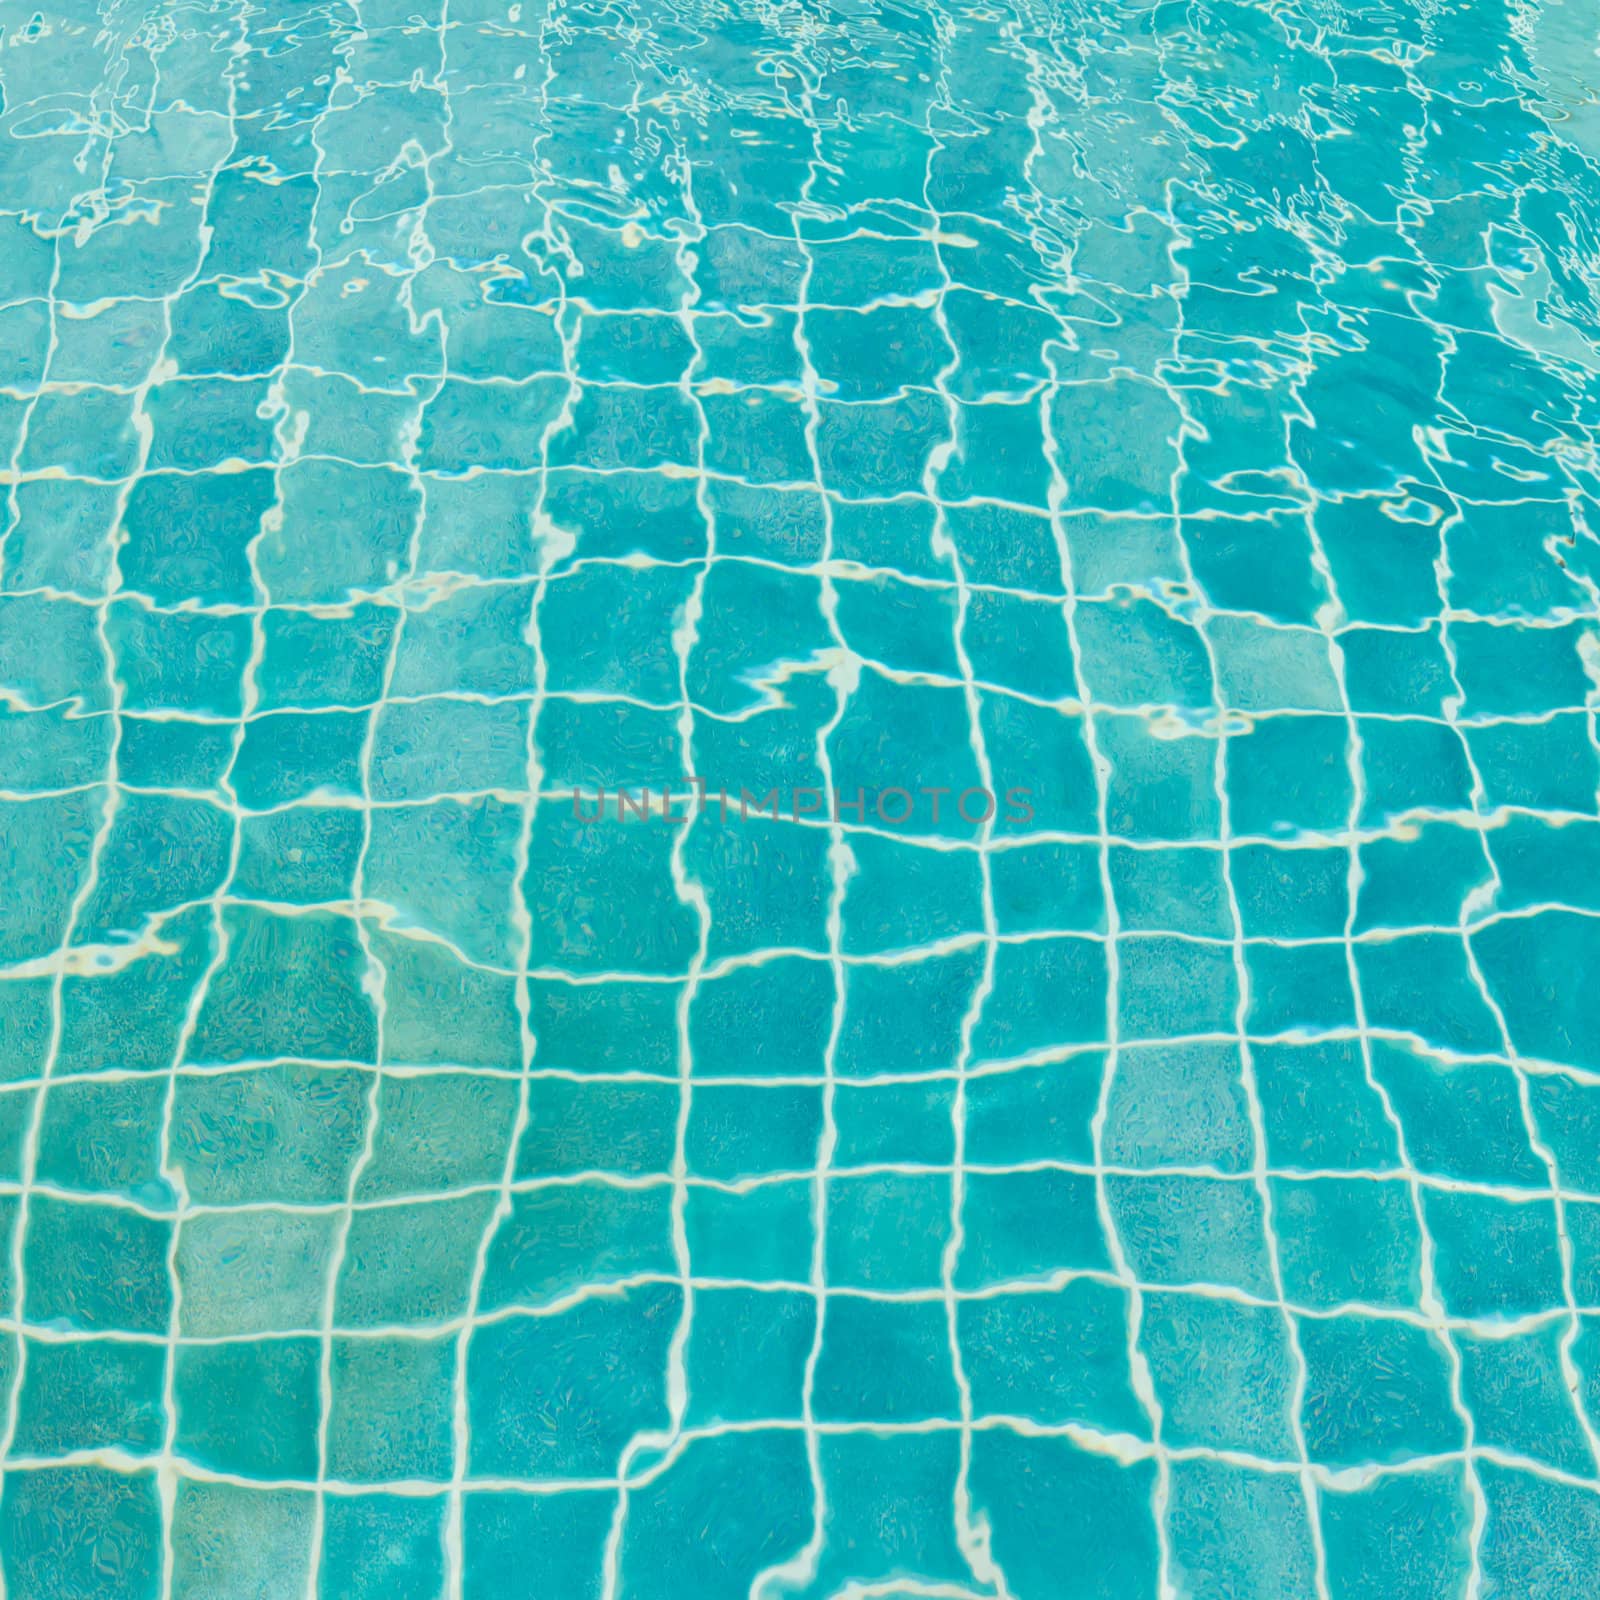 aqua blue tile in pool for background